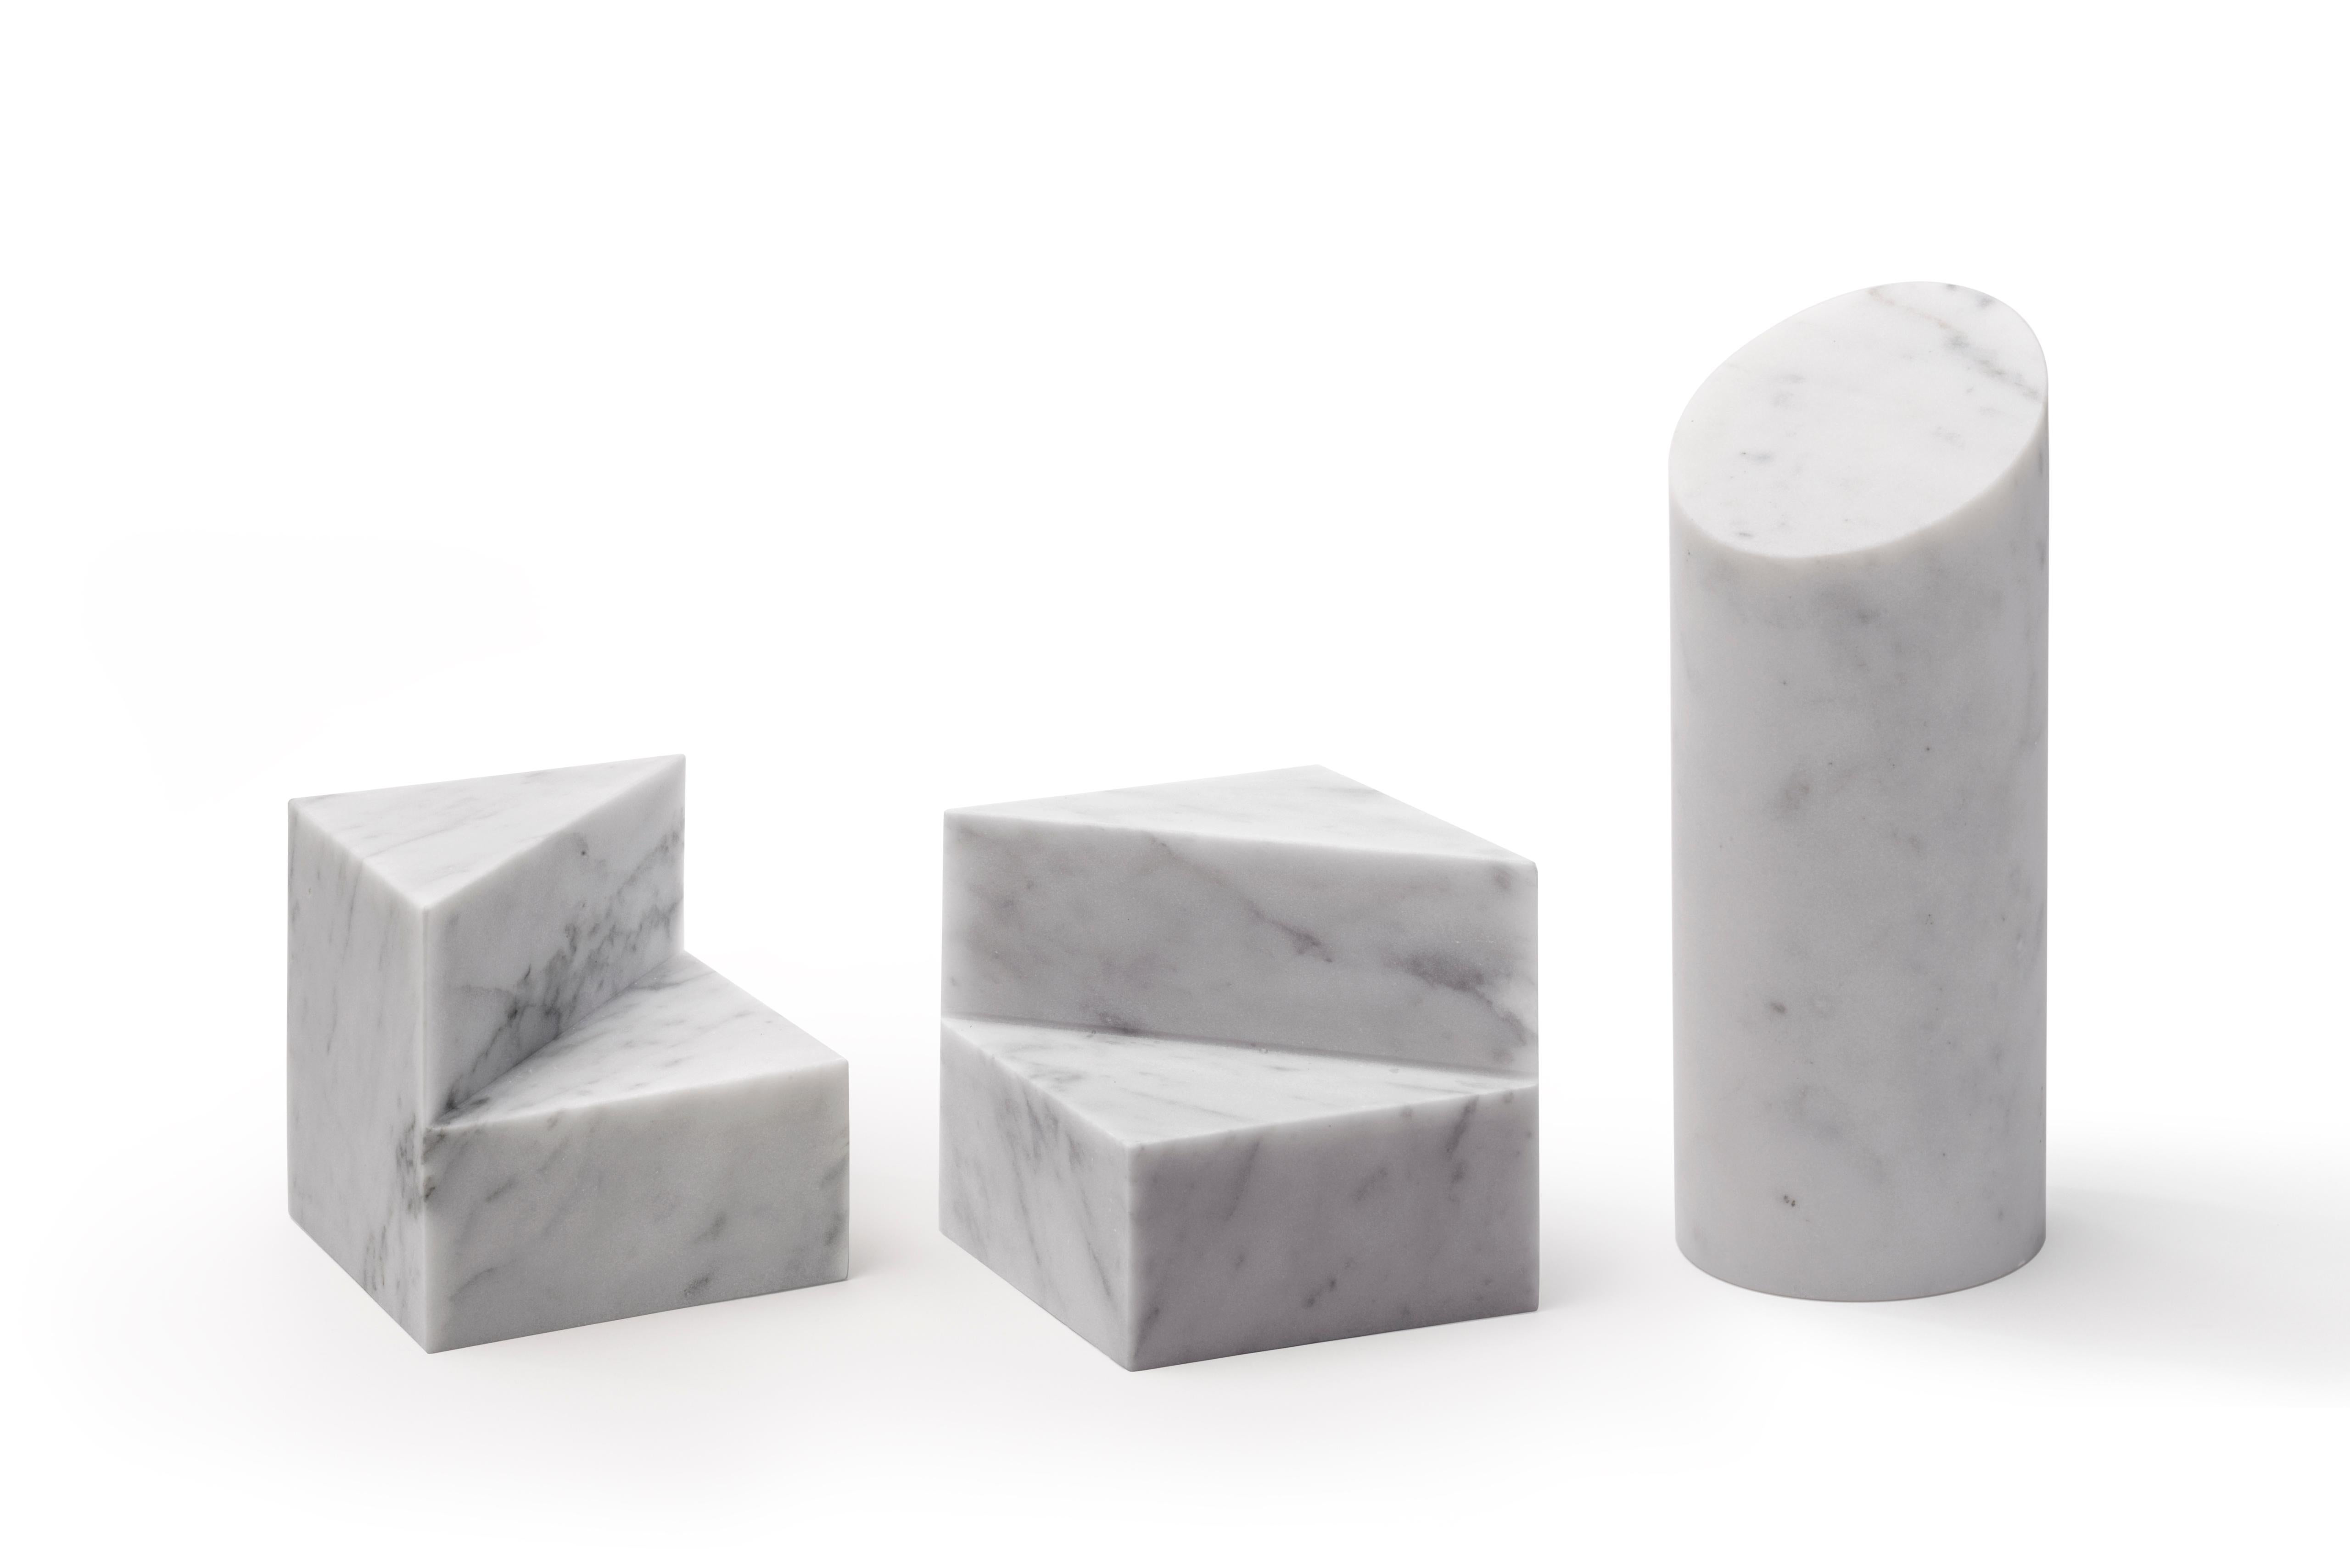 Italian Salvatori Kilos Cube Paperweight in Bianco Carrara Marble by Elisa Ossino For Sale